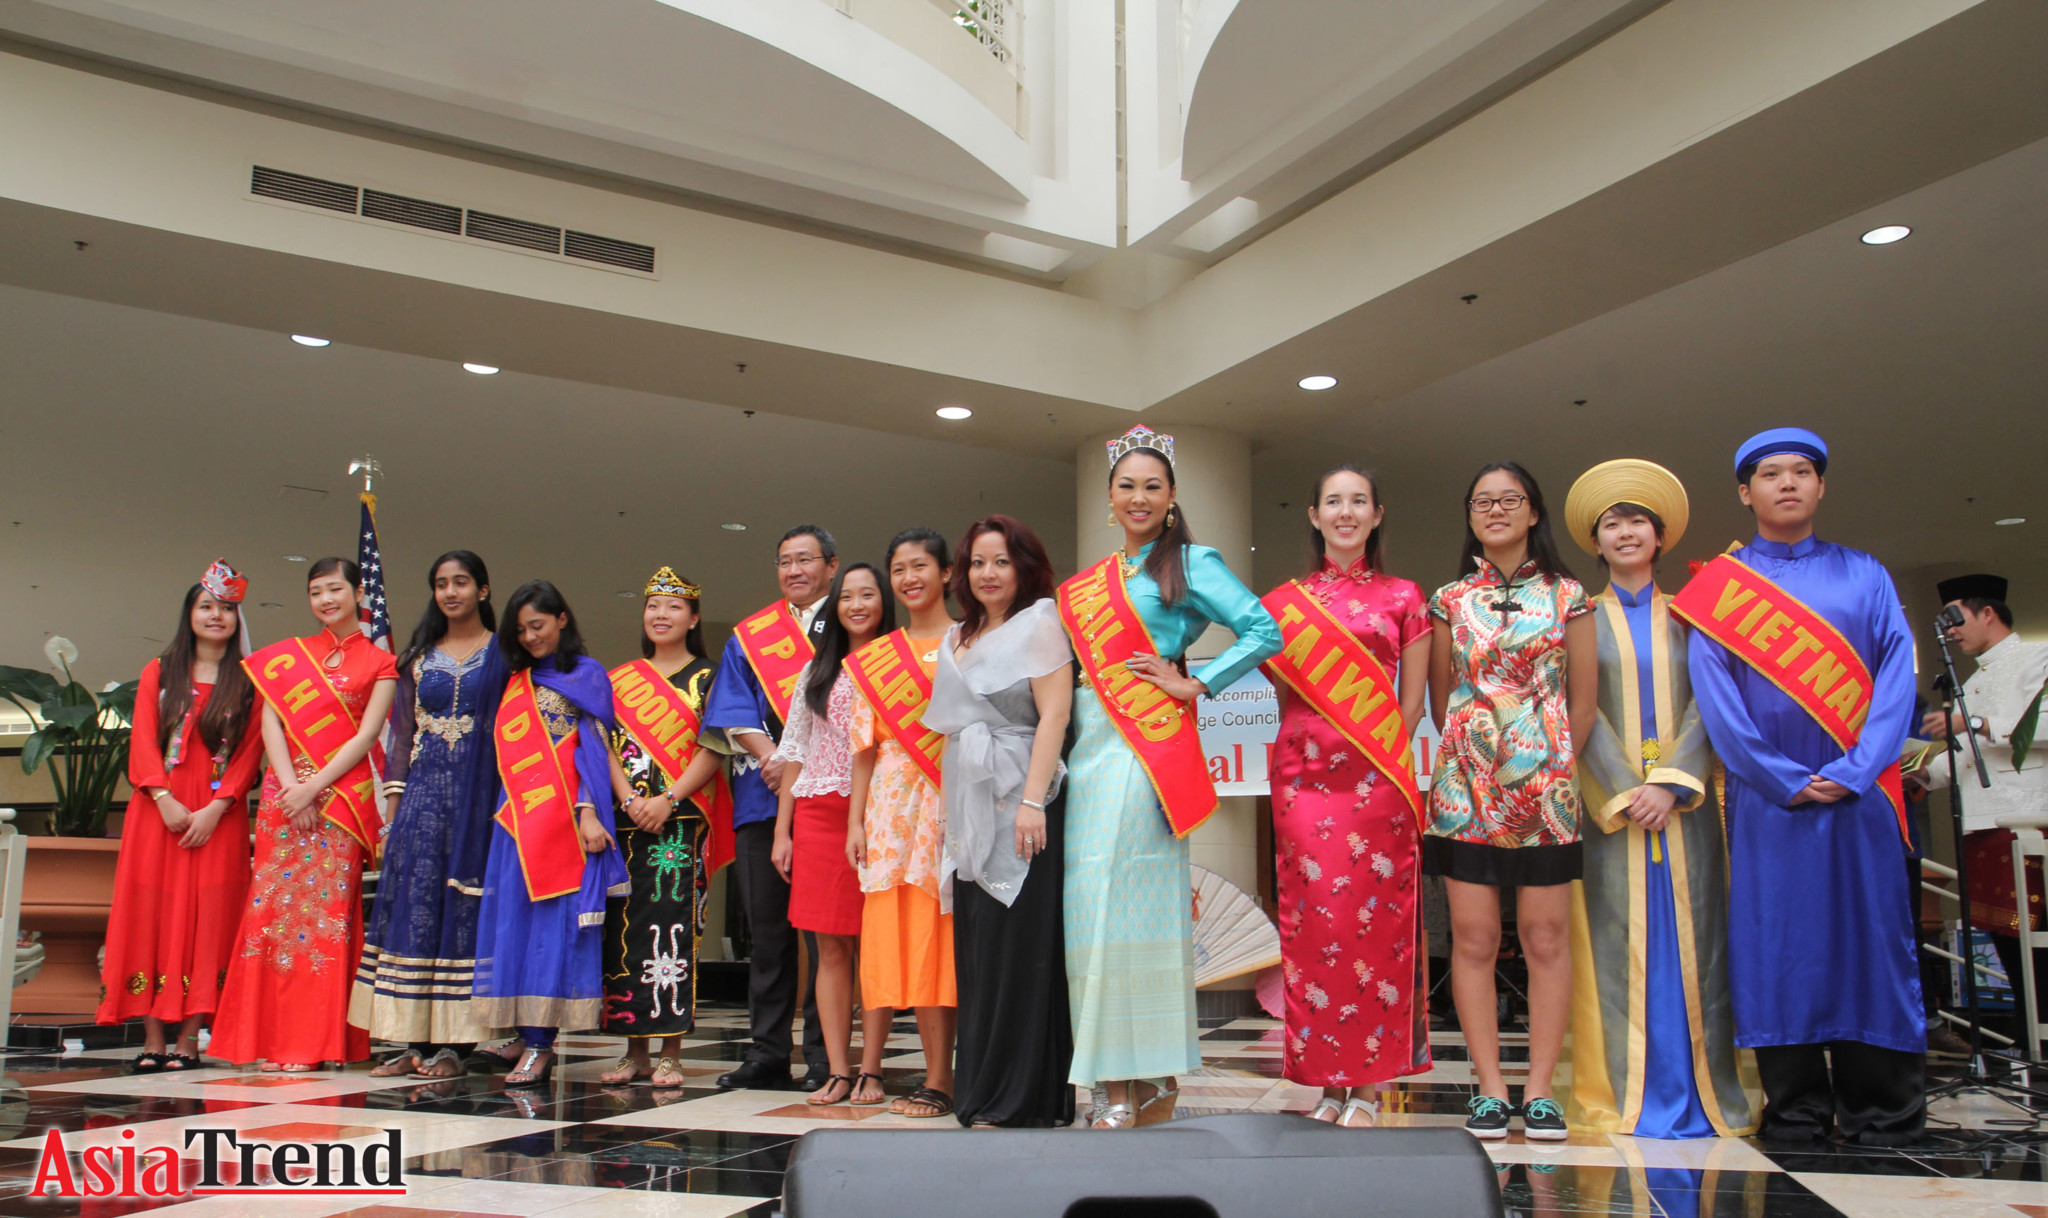 Asian community of Orlando celebrates the 5th annual Asian Cultural